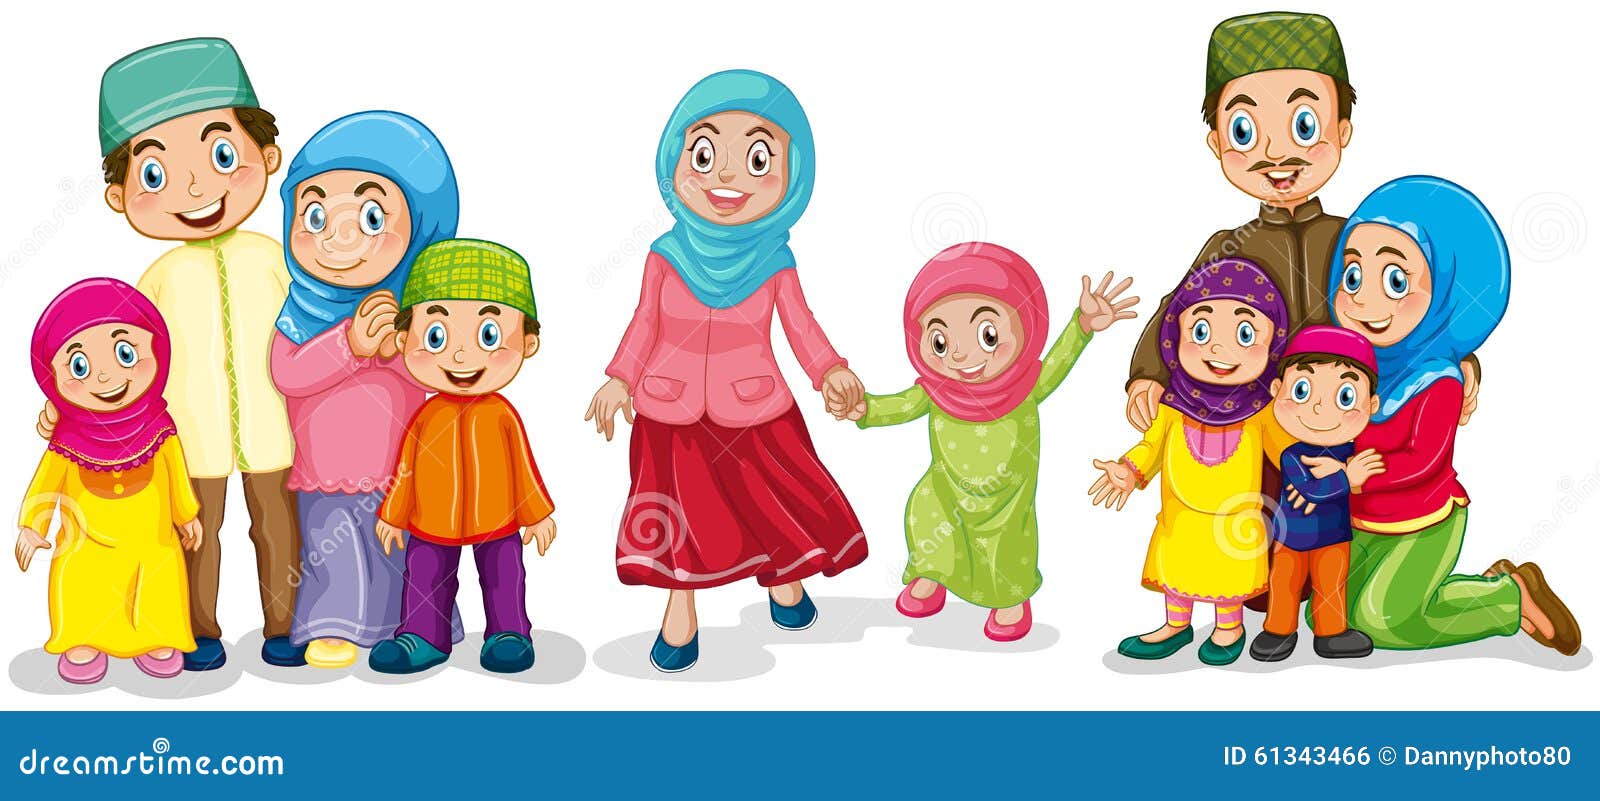 Stock Illustration Muslim Families Looking Happy Illustration Image61343466